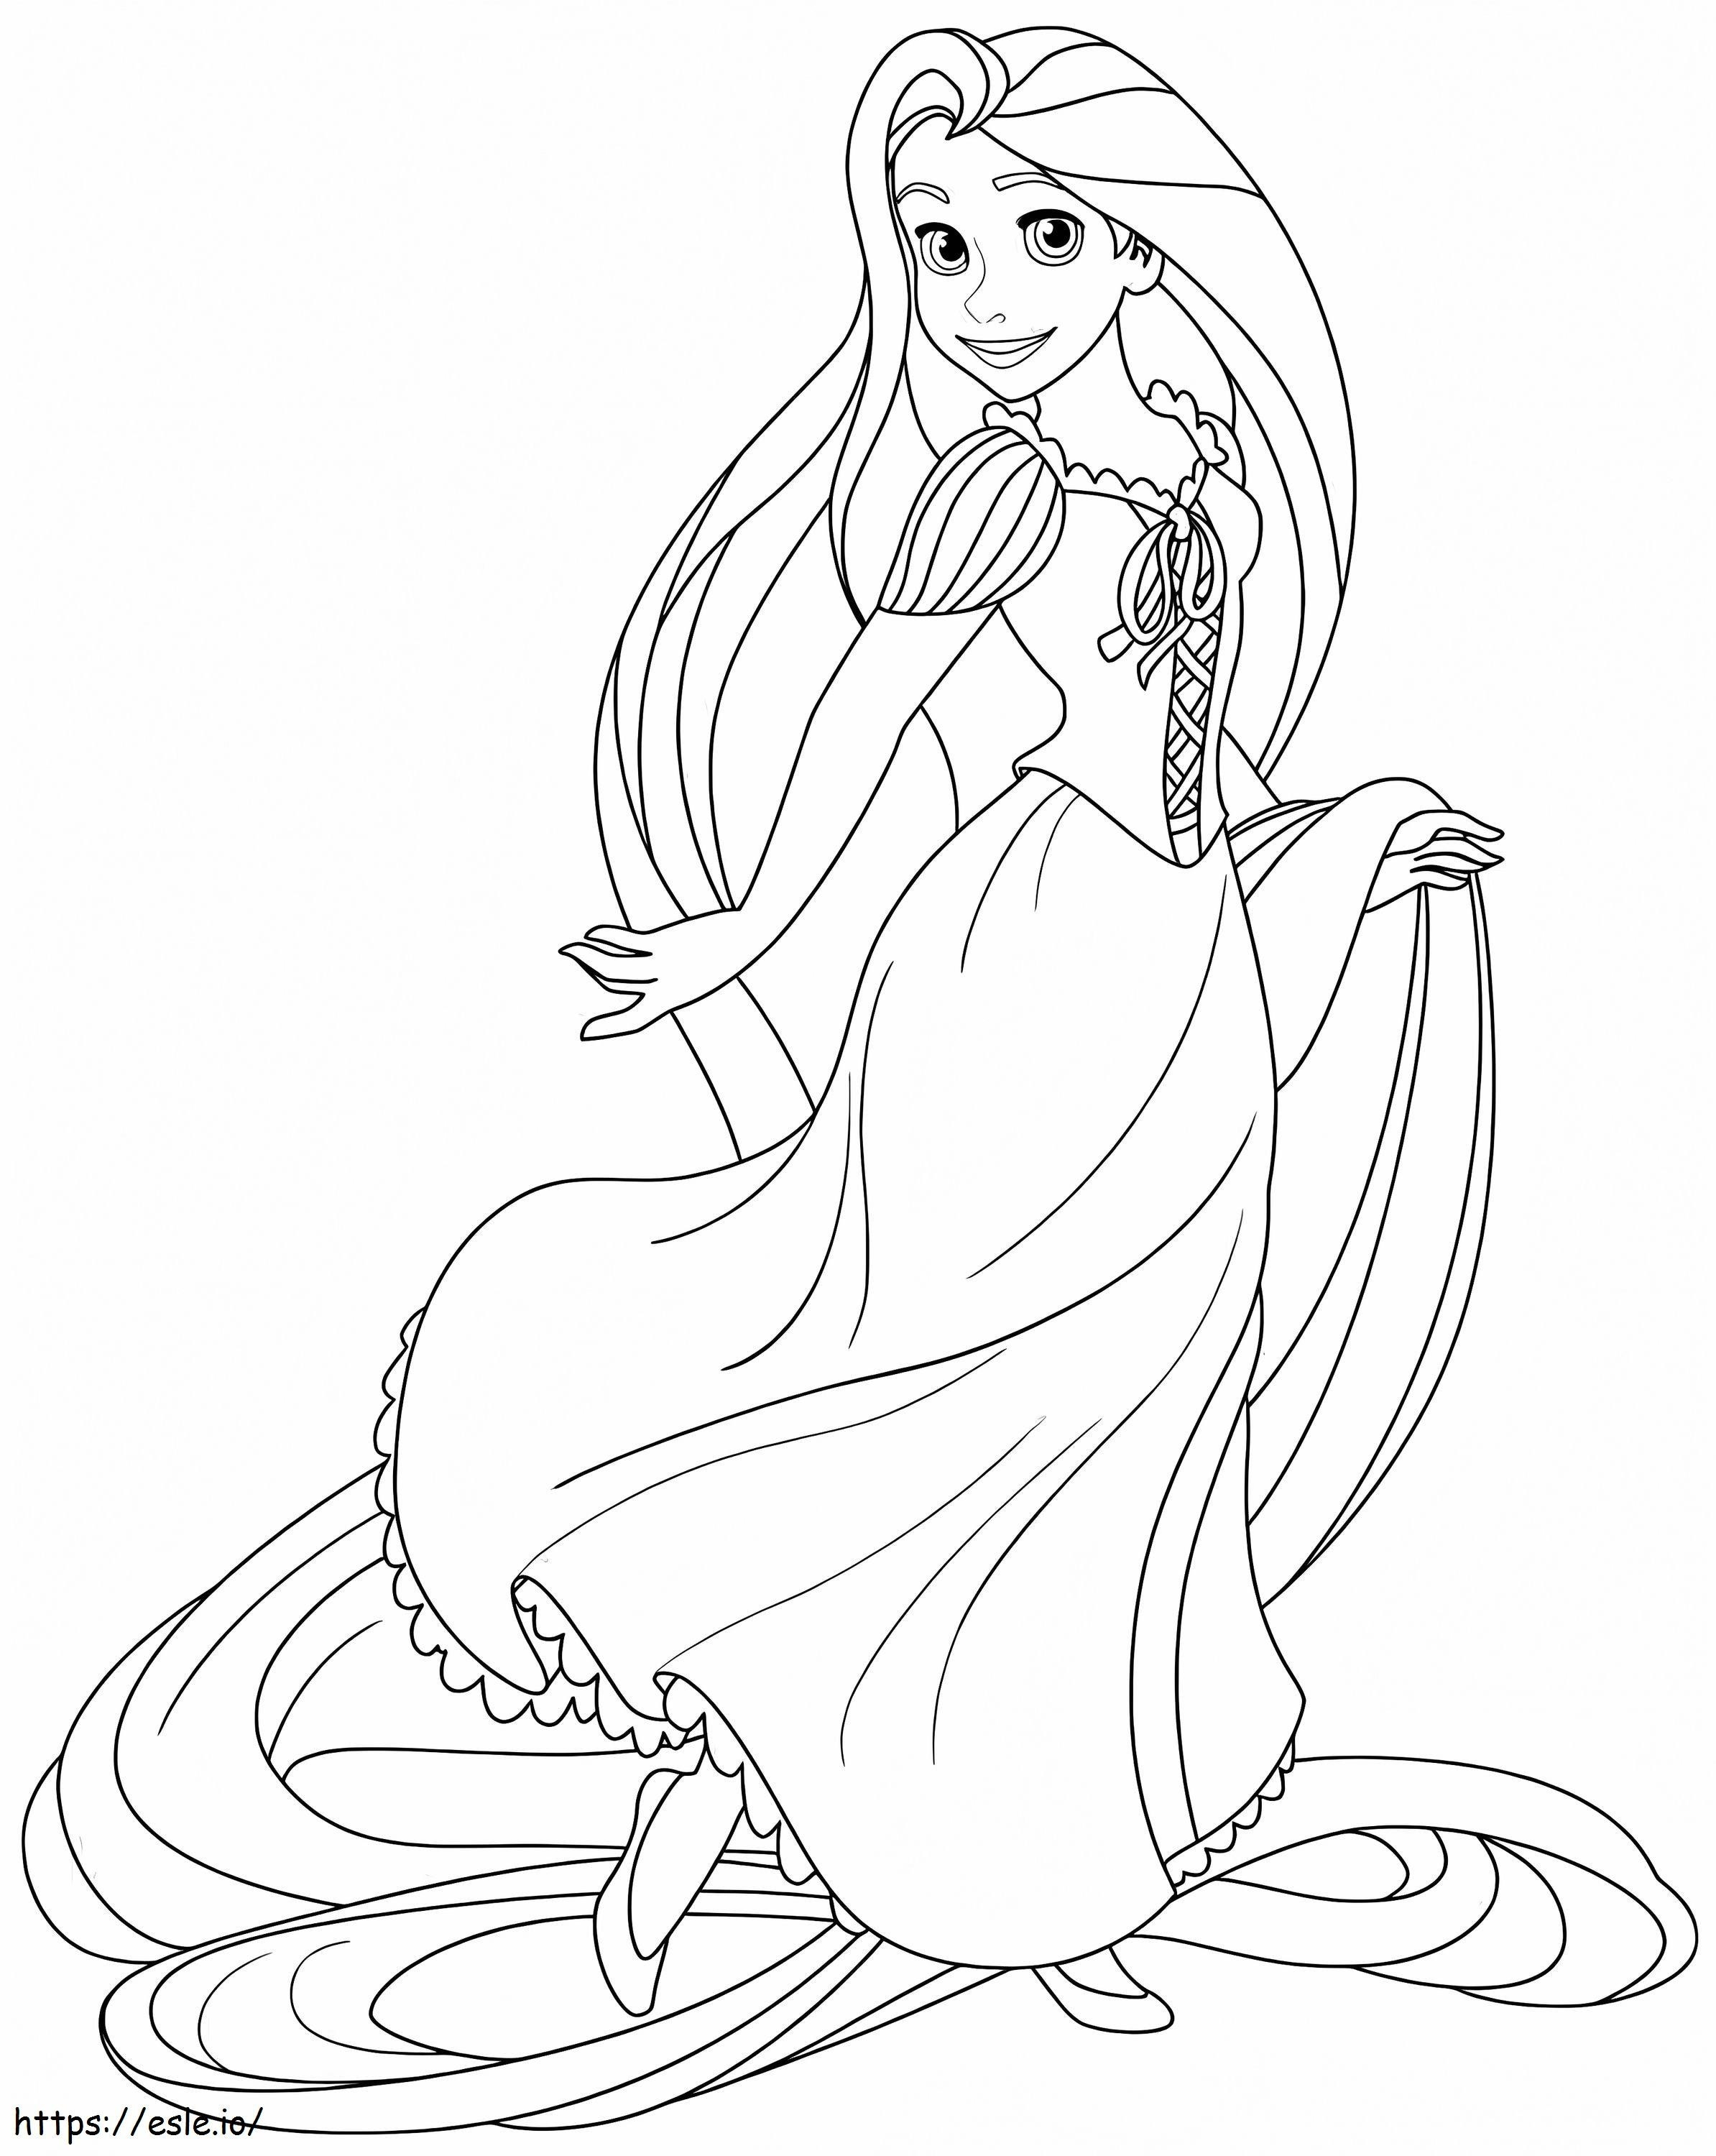 Linda princesa Rapunzel para colorear